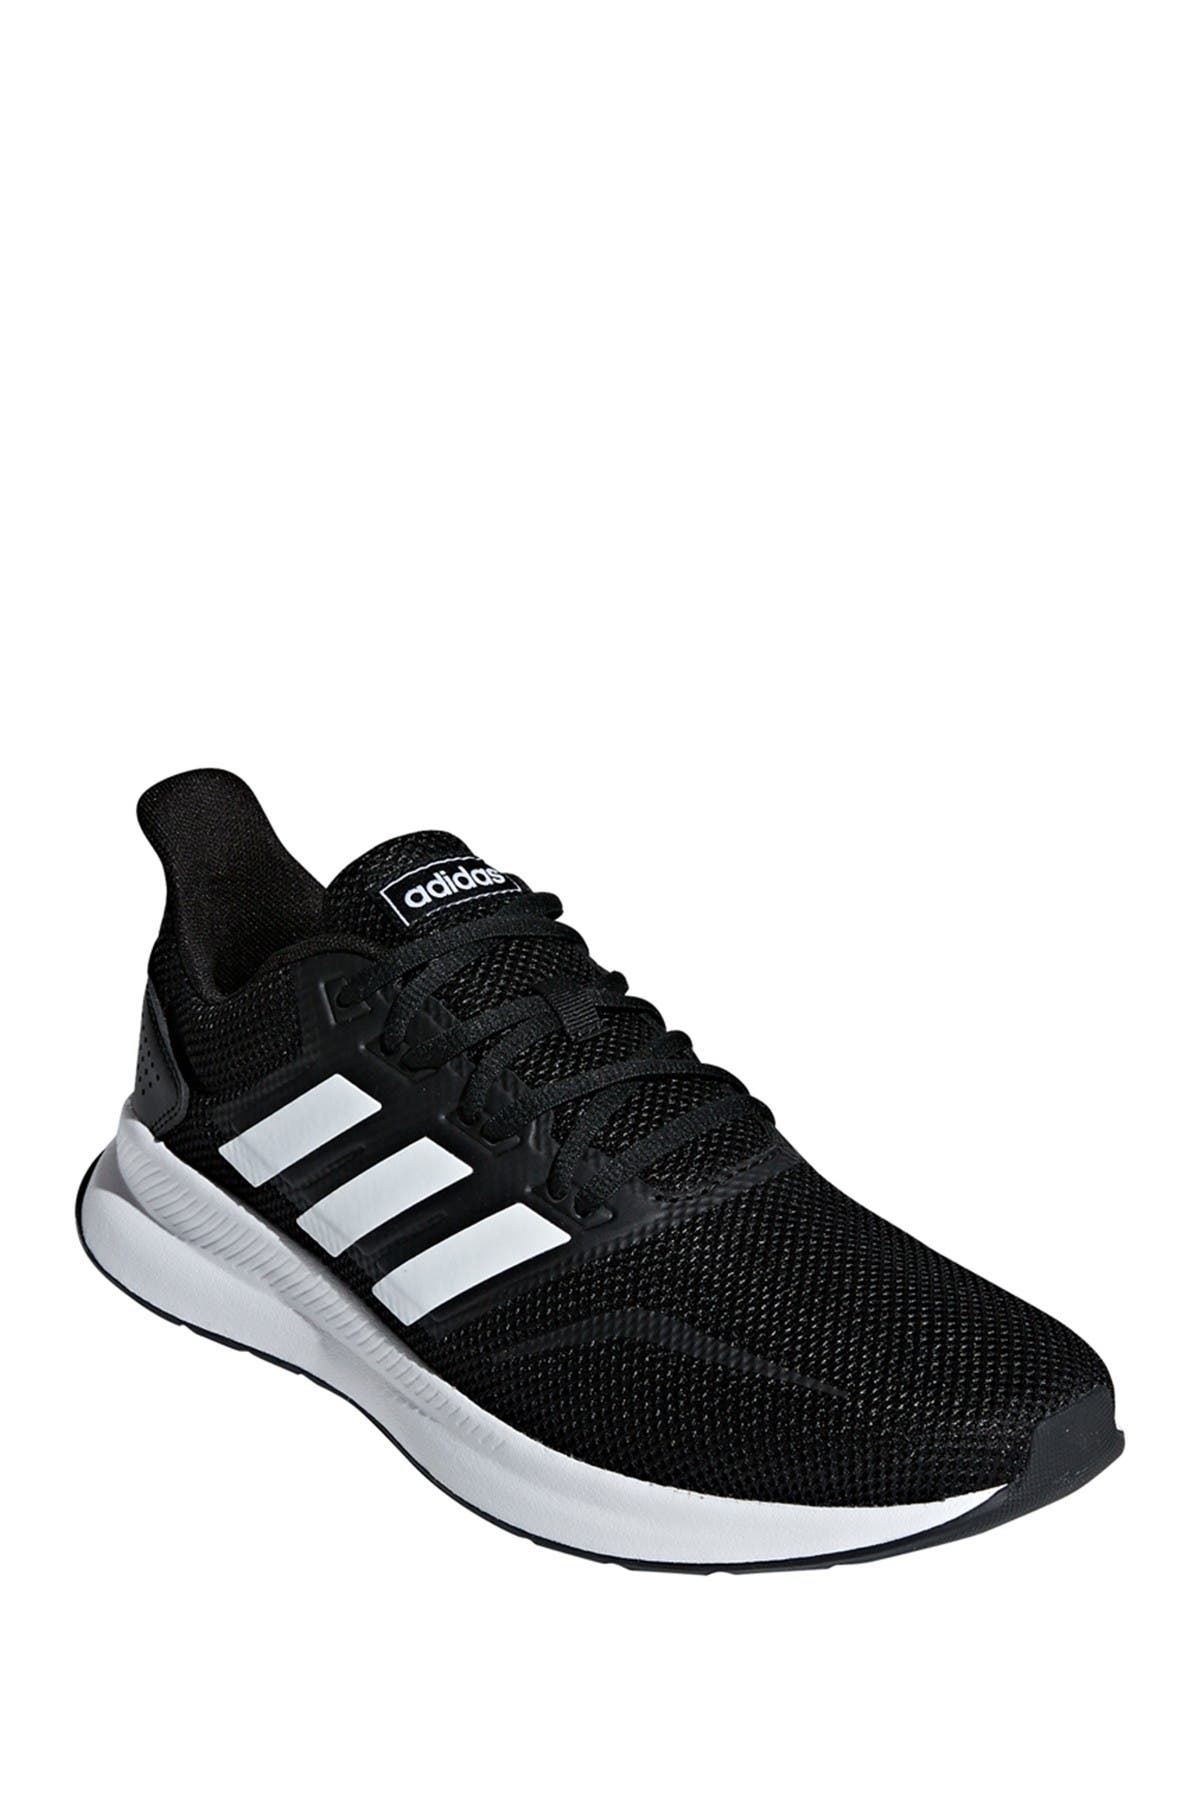 adidas runfalcon men's running shoes